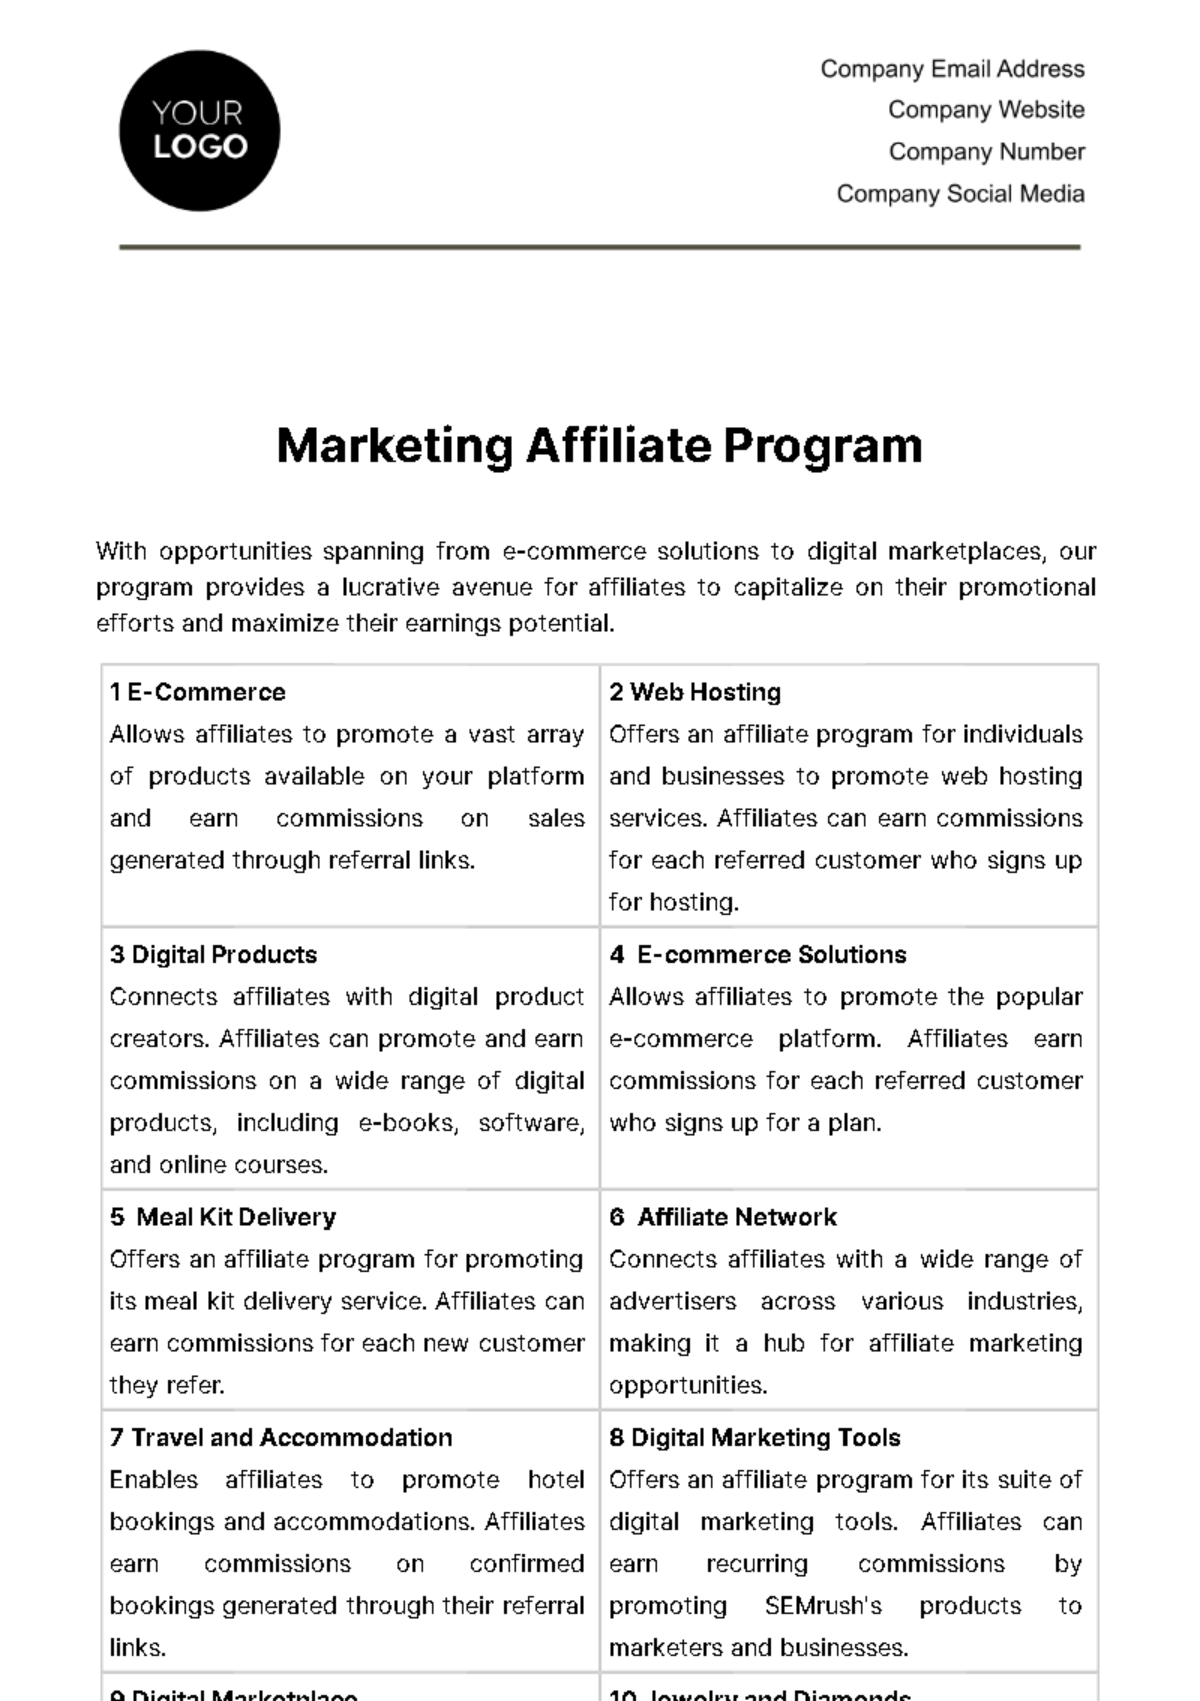 Free Marketing Affiliate Marketing Program Template